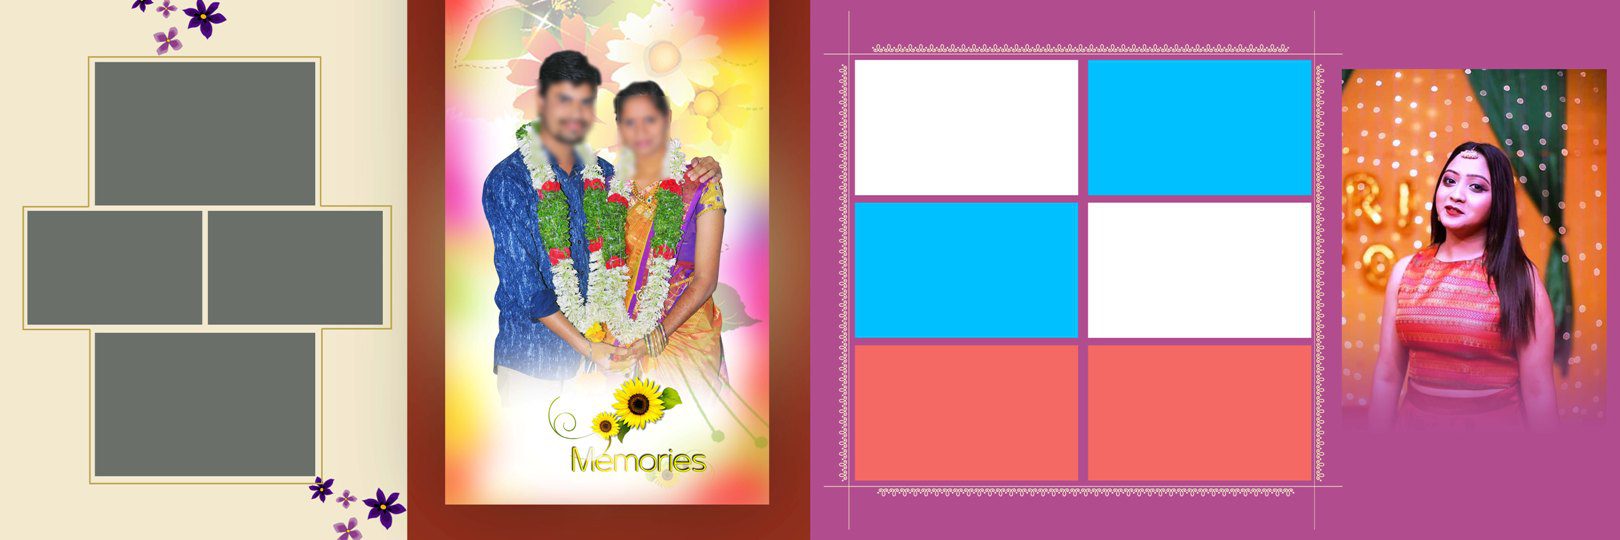 south indian wedding, album design psd free download